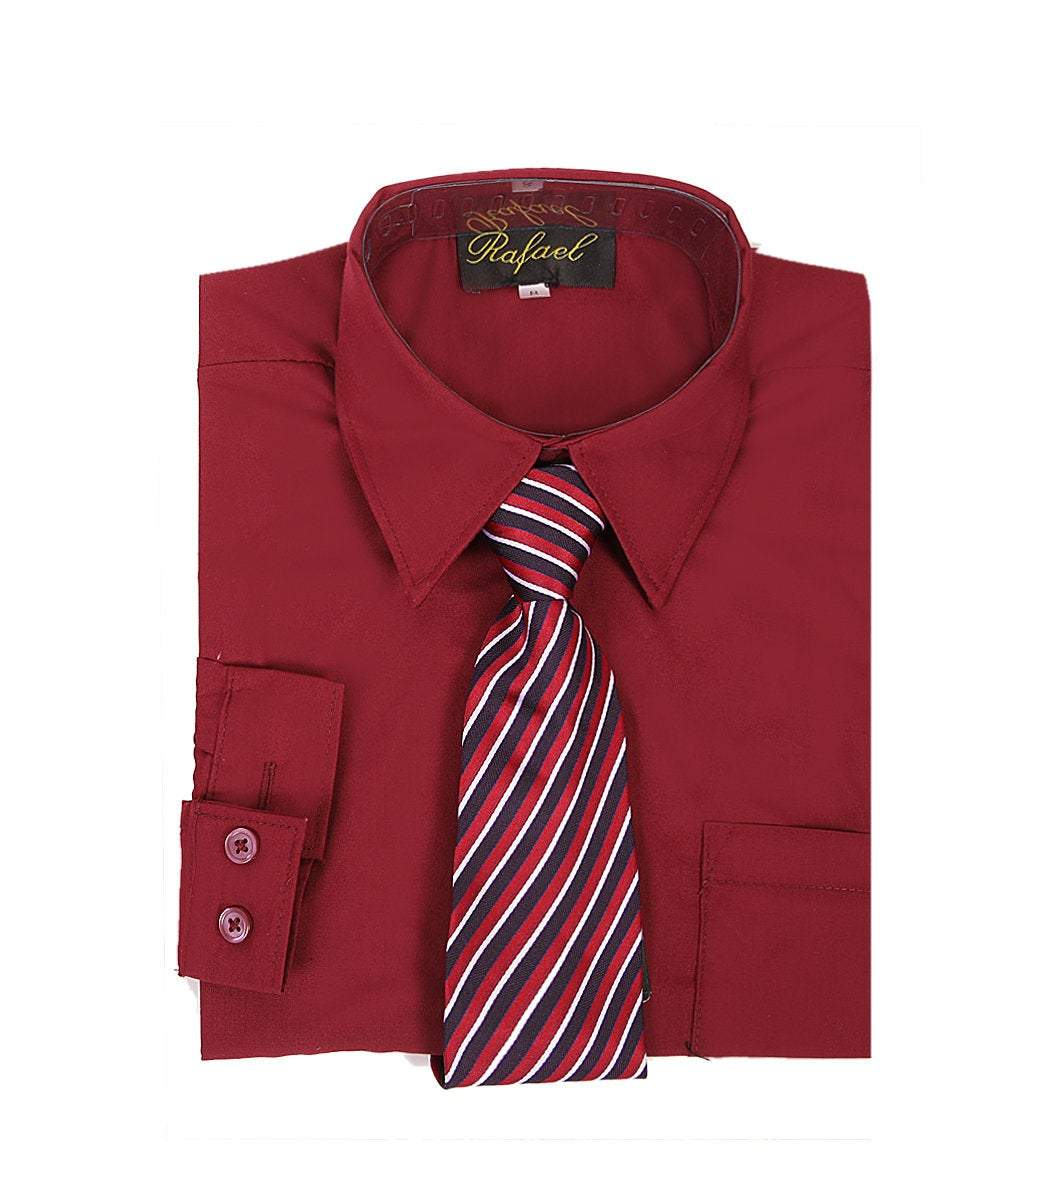 Boys Burgundy Formal Dress Shirt and Tie - Malcolm Royce